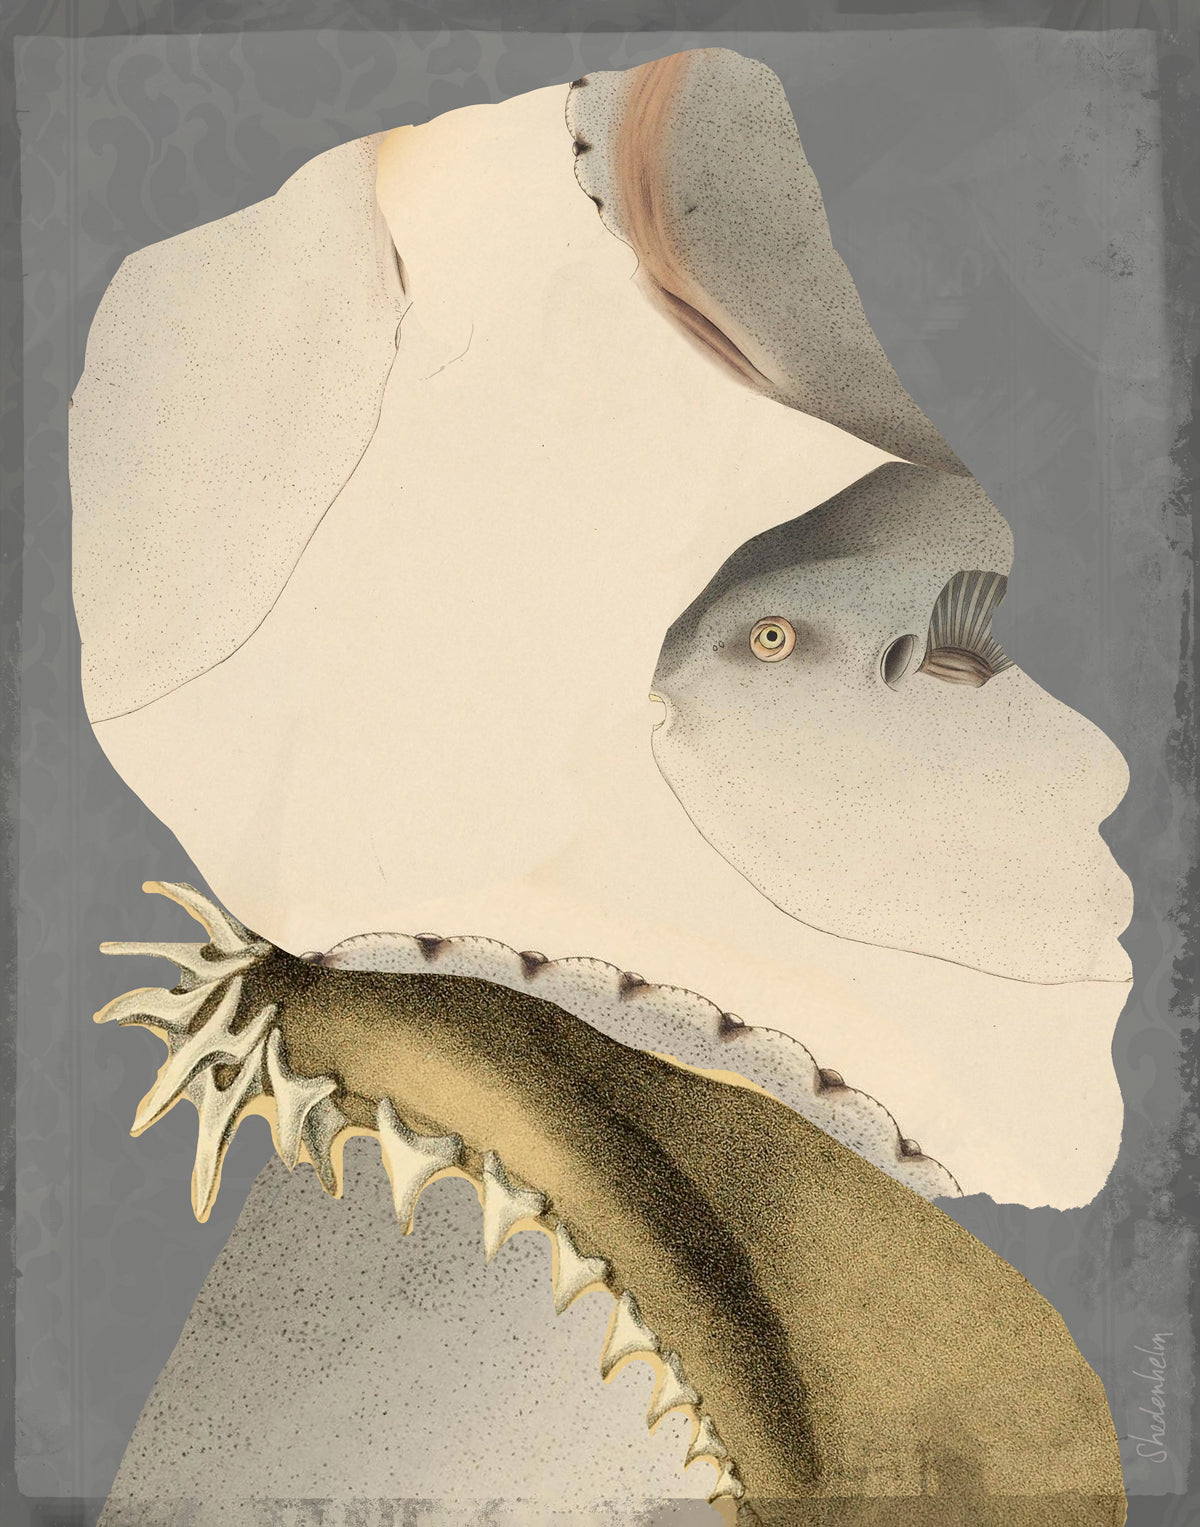 Kendra Shedenhelm "Transformations: Shark"